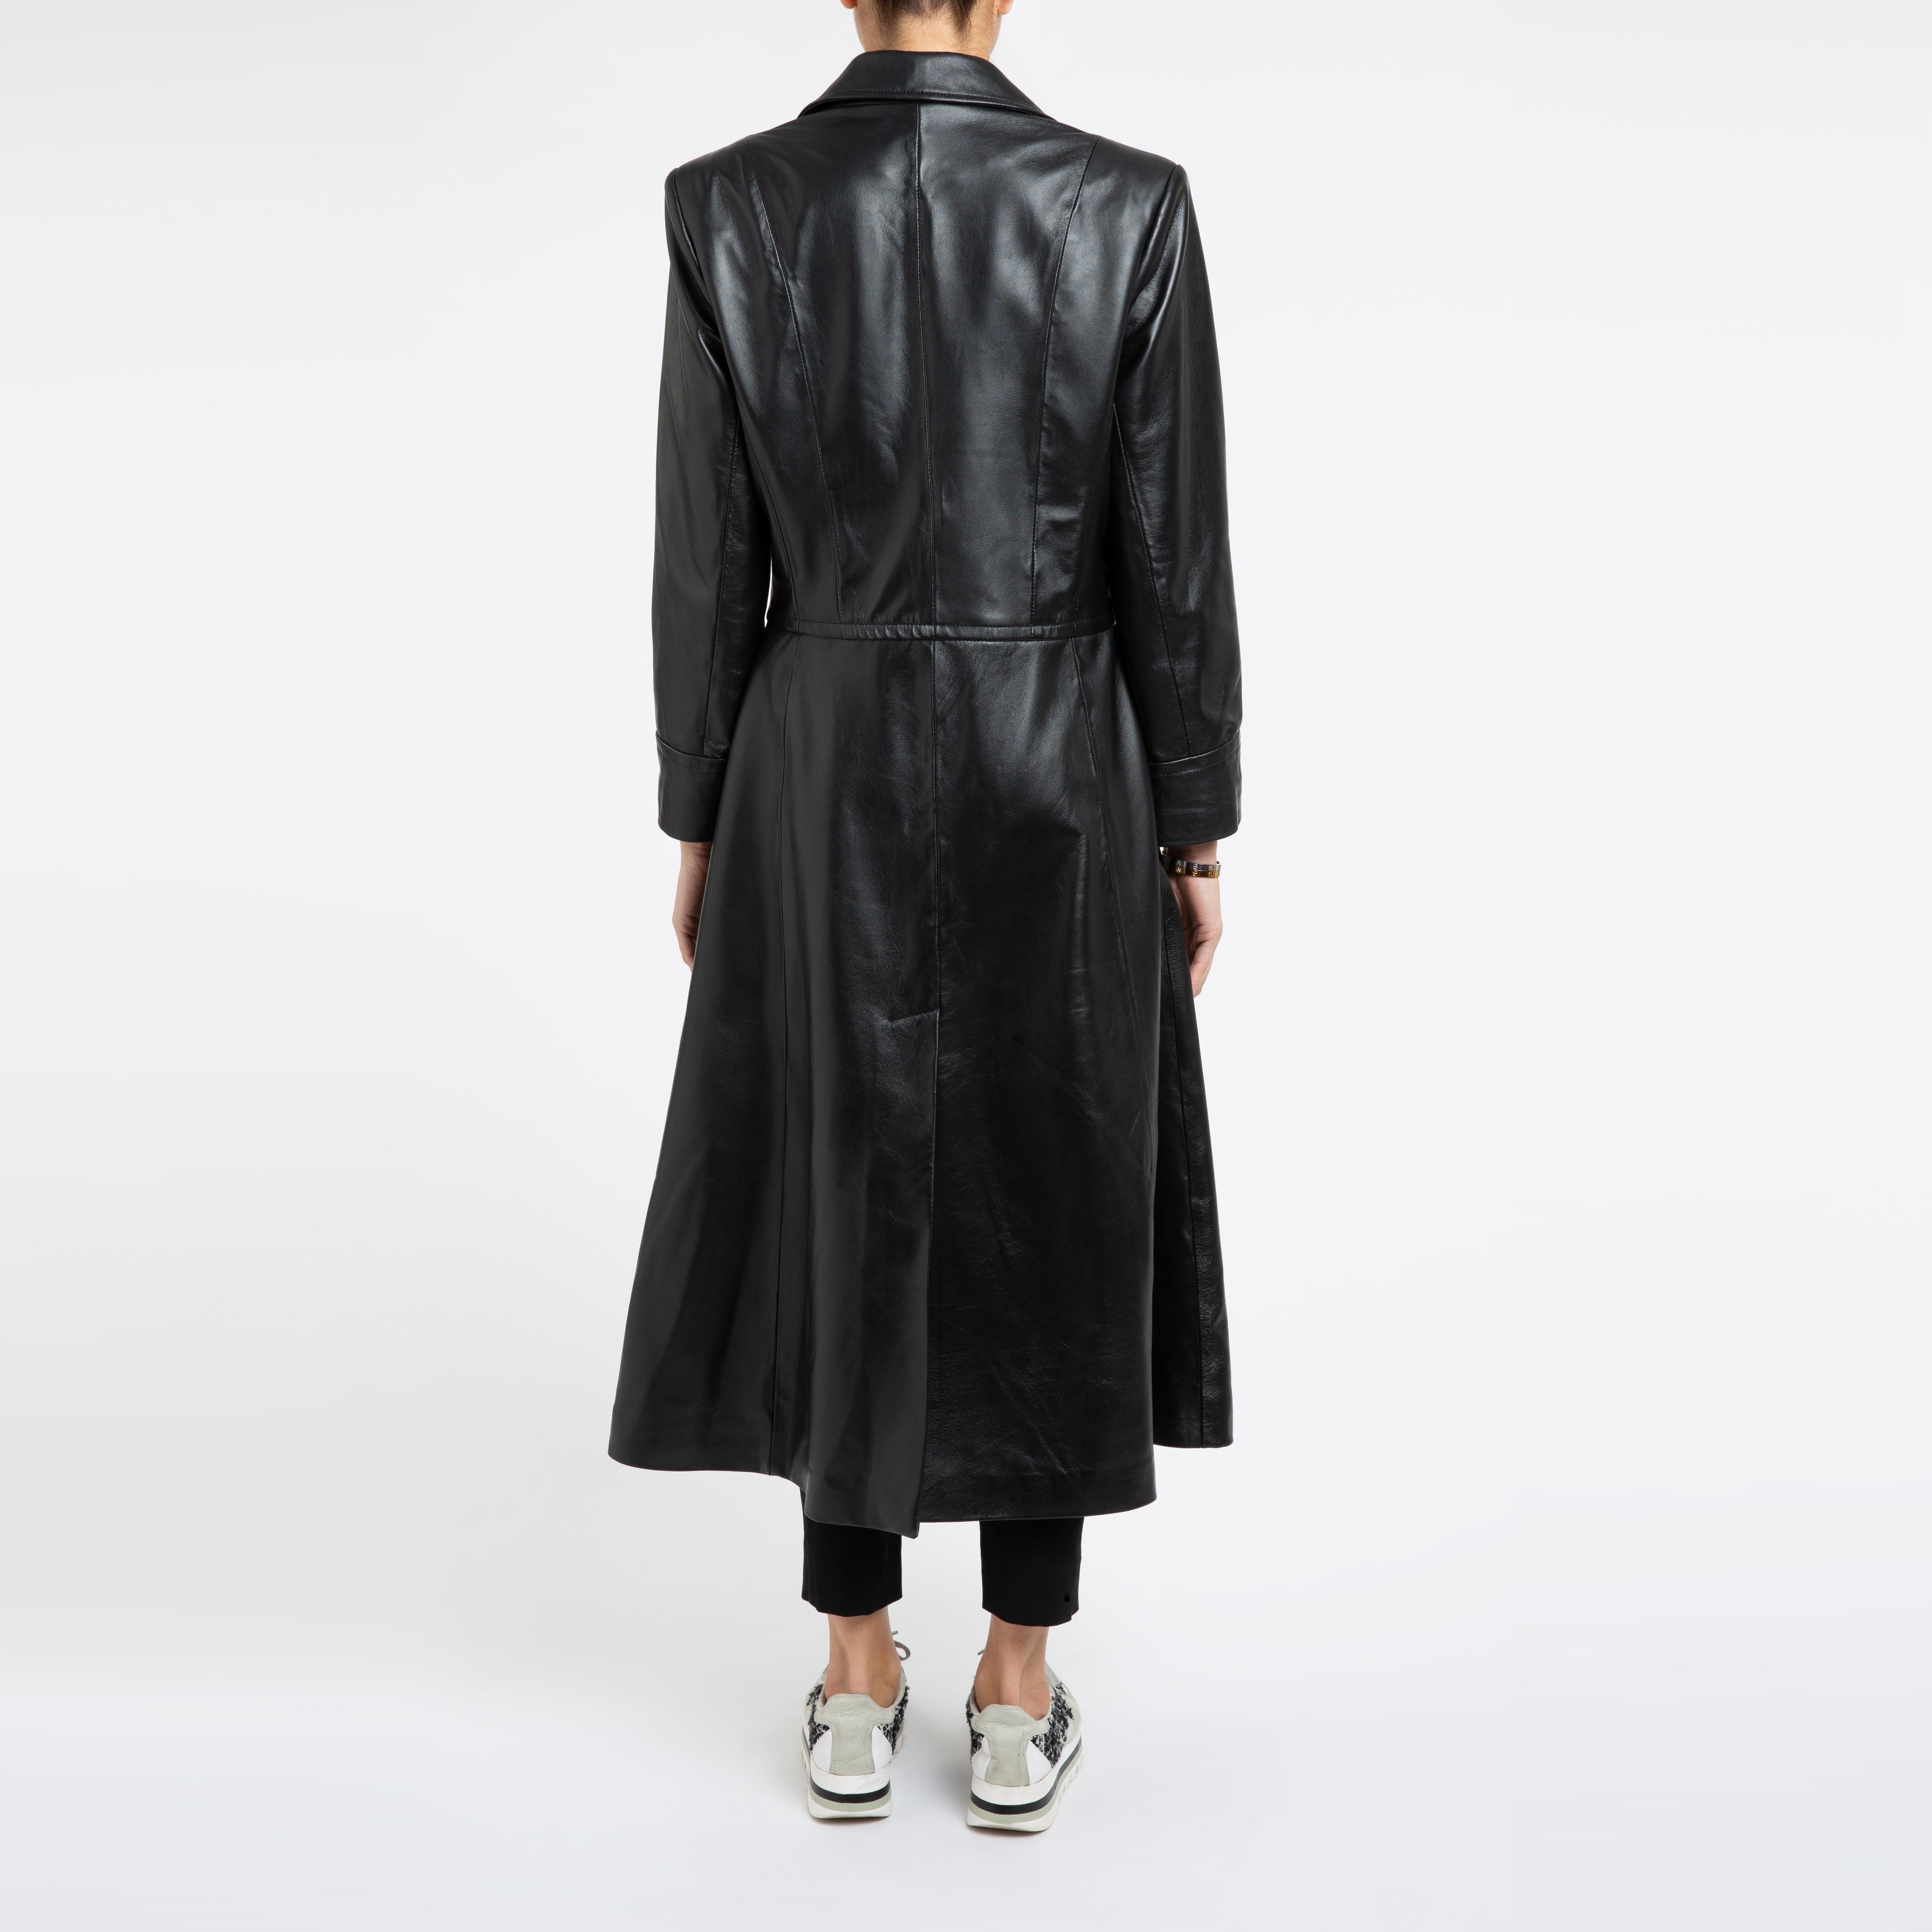 Verheyen London Oversize 70's Leather Trench Coat in Black - Size uk 10 For Sale 3